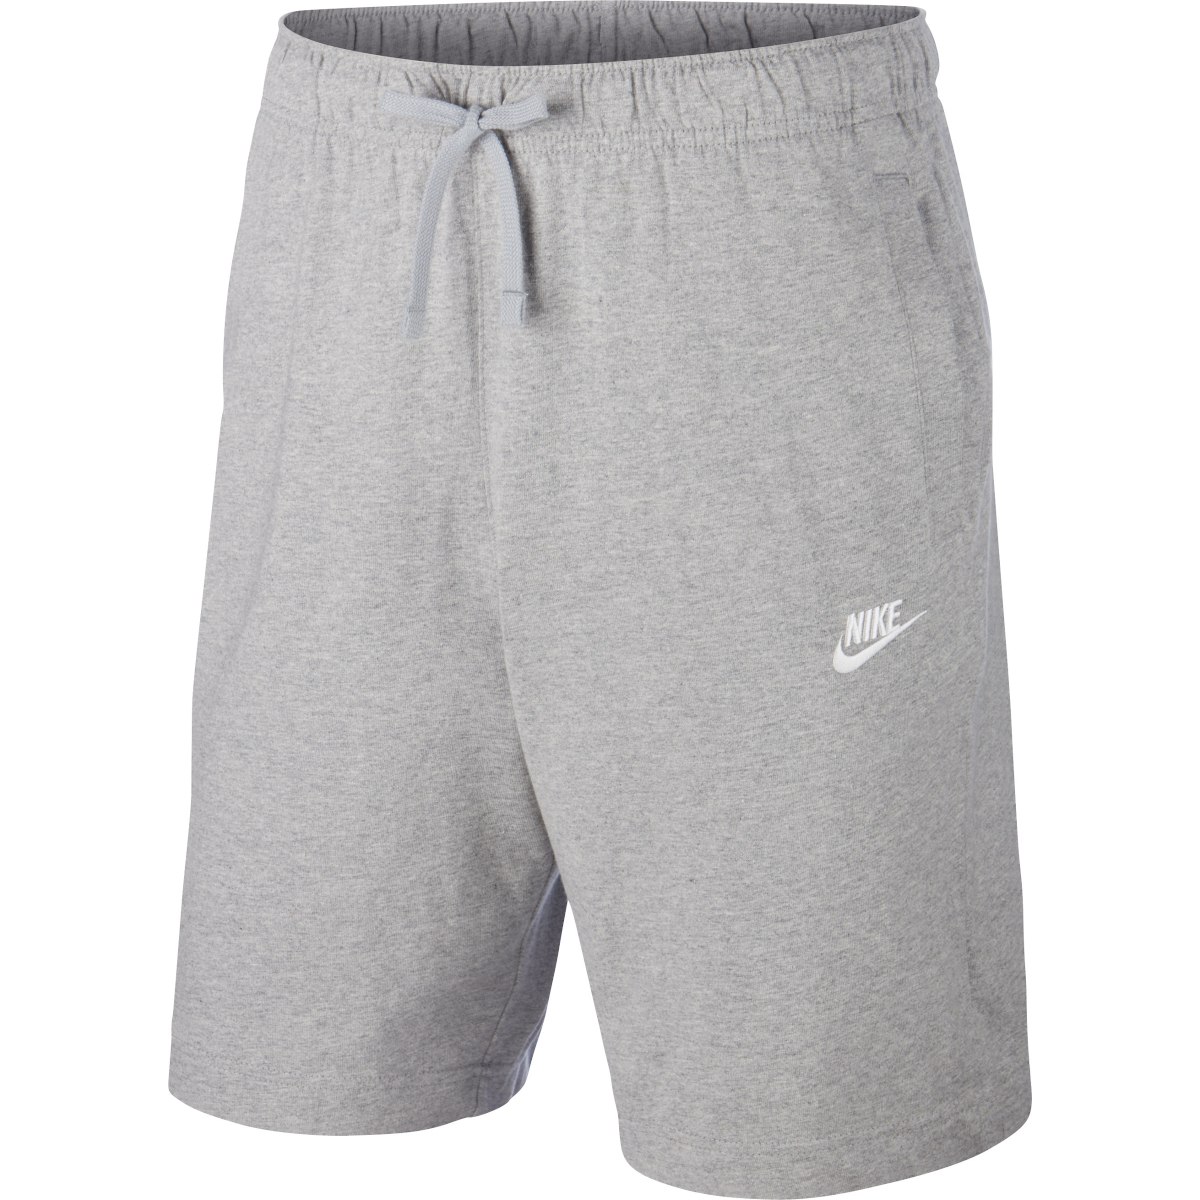 Productfoto van Nike Sportswear Club Shorts Heren - dark grey heather/white BV2772-063